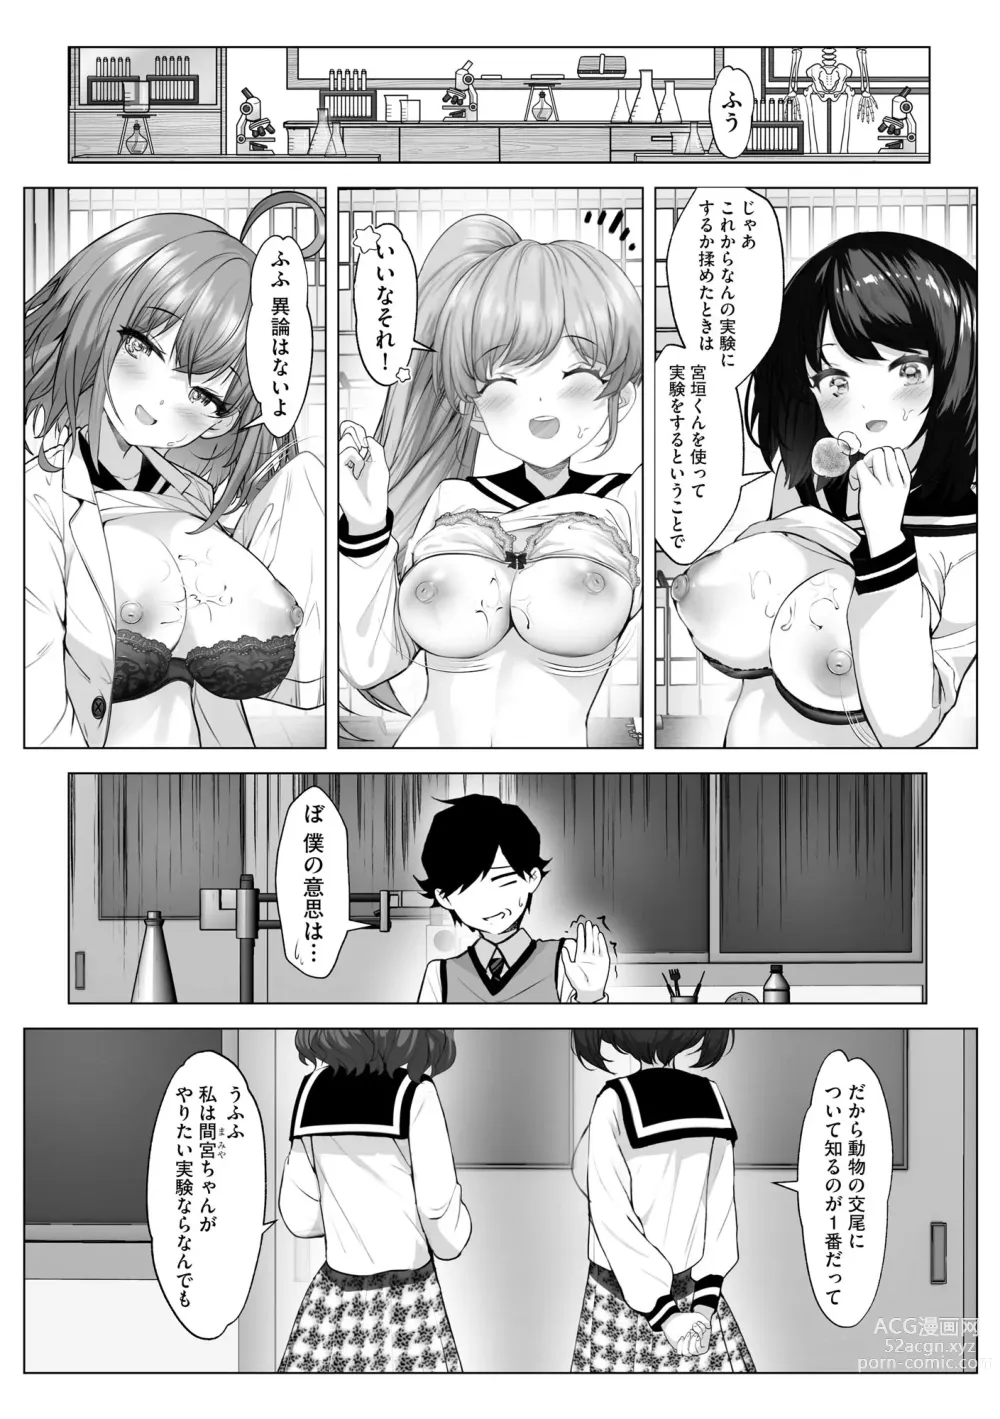 Page 379 of manga Cyberia Plus Vol. 15